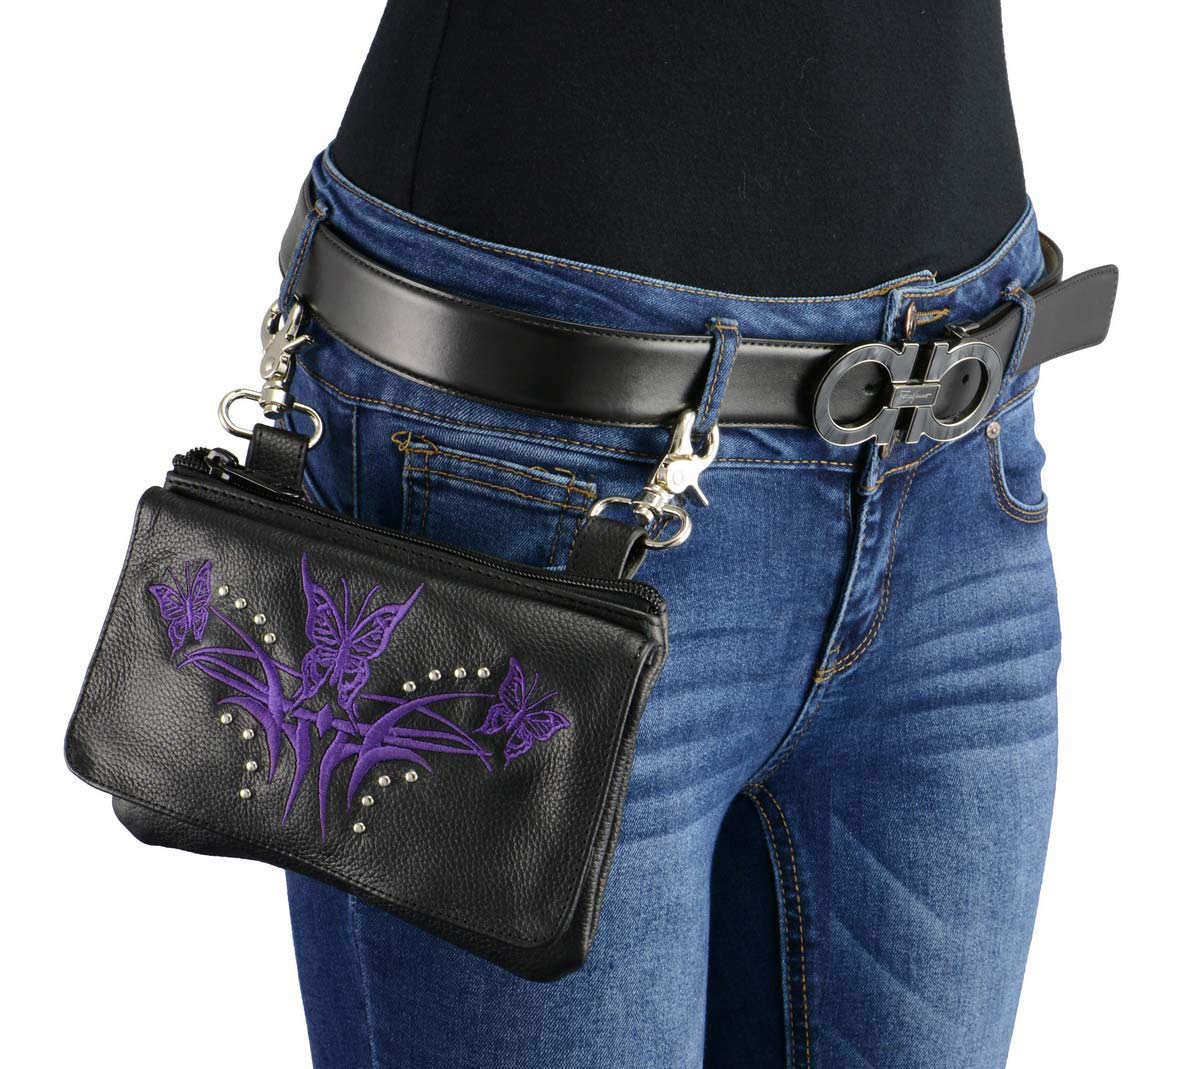 Milwaukee Leather MP8851 Women's Black and Purple Leather Multi Pocket Belt Bag - One Size